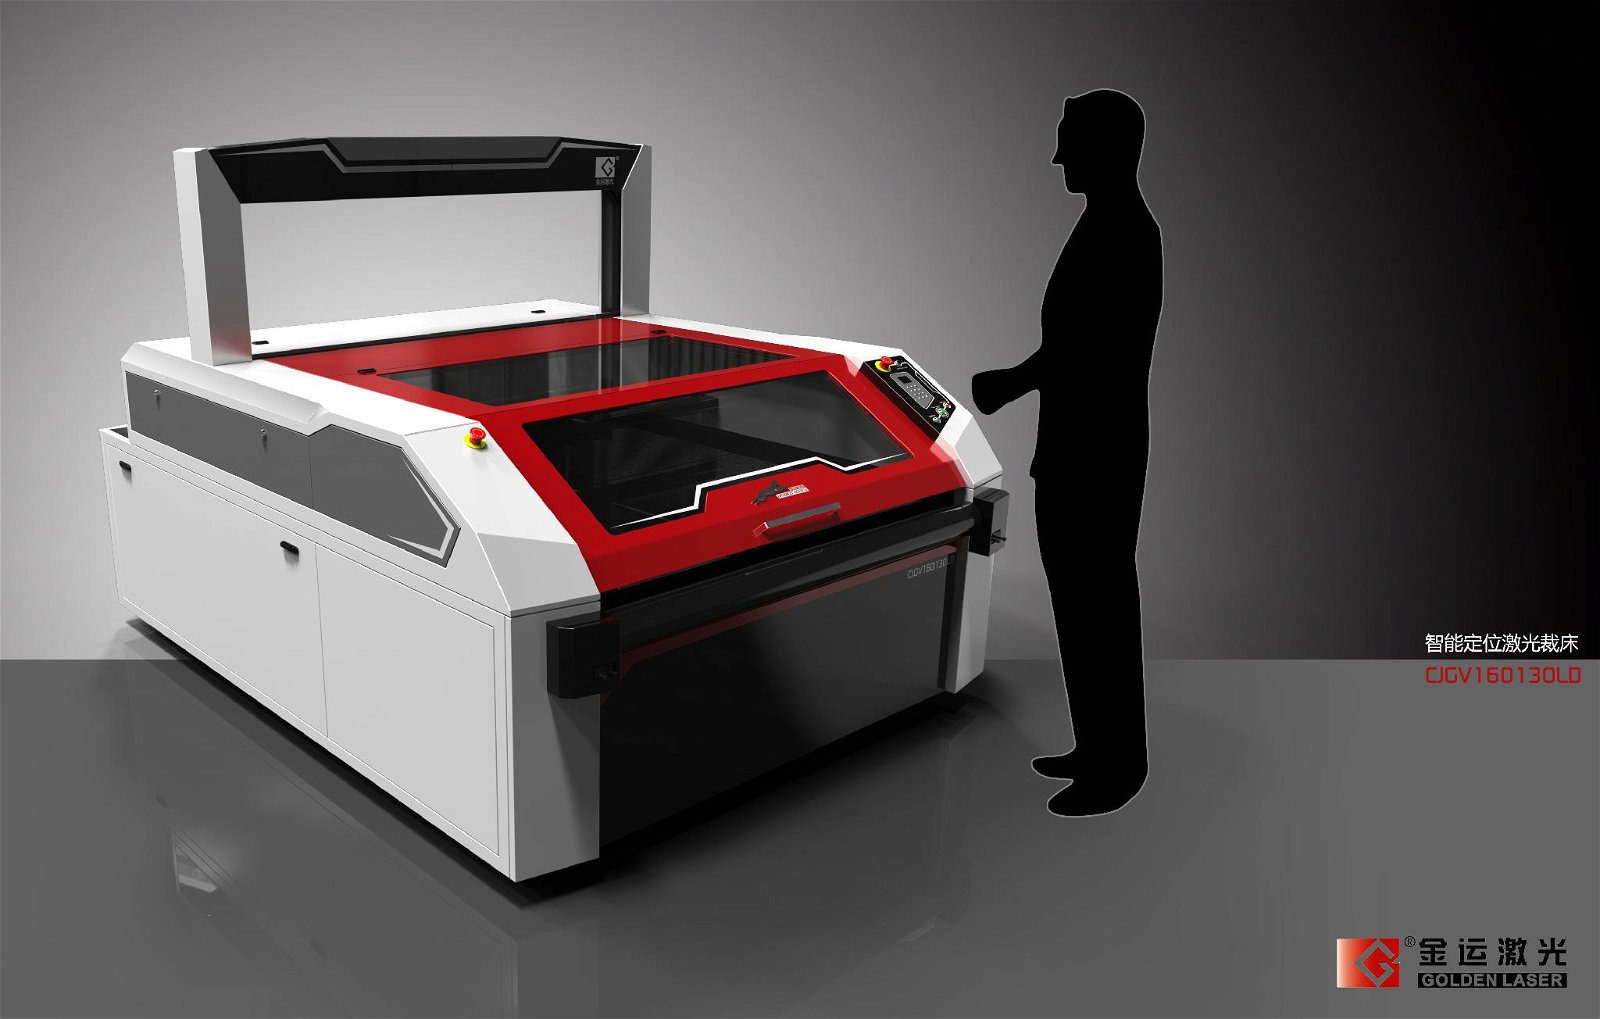 Auto Feeding Flying Scan Laser Cutting Machine for Printed Fabrics 3